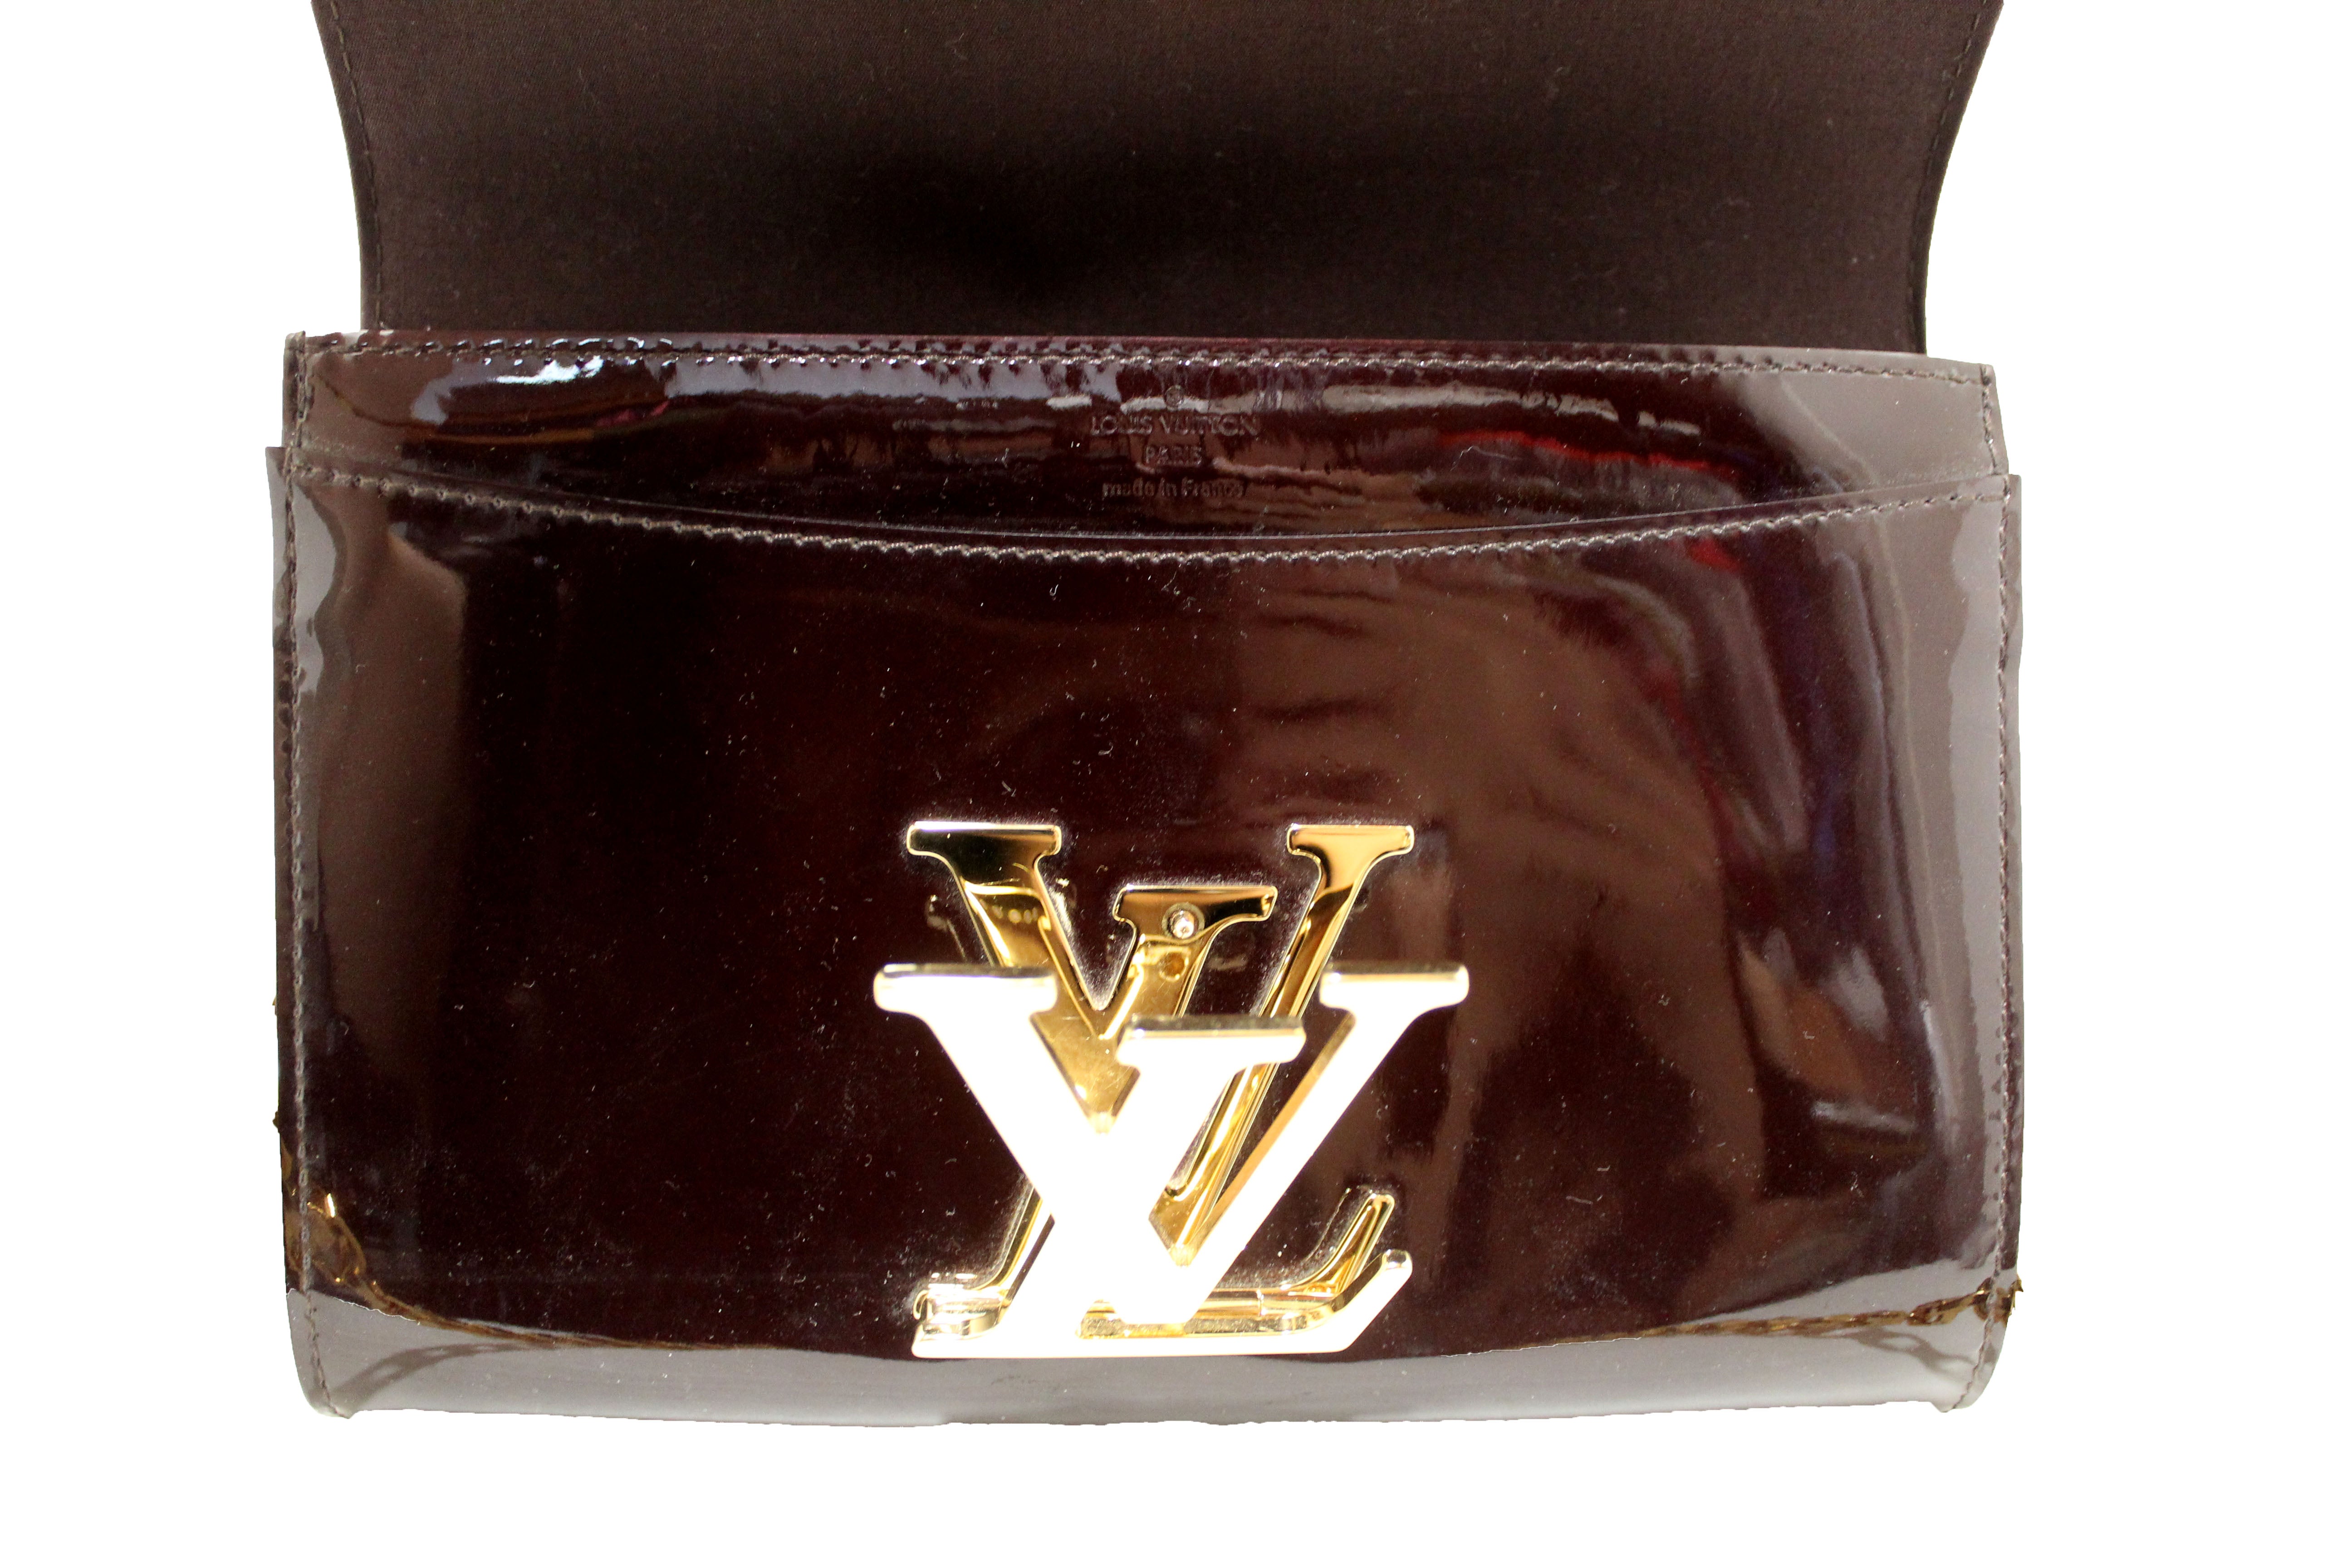 Louis Vuitton Amarante Vernis Sobe Clutch